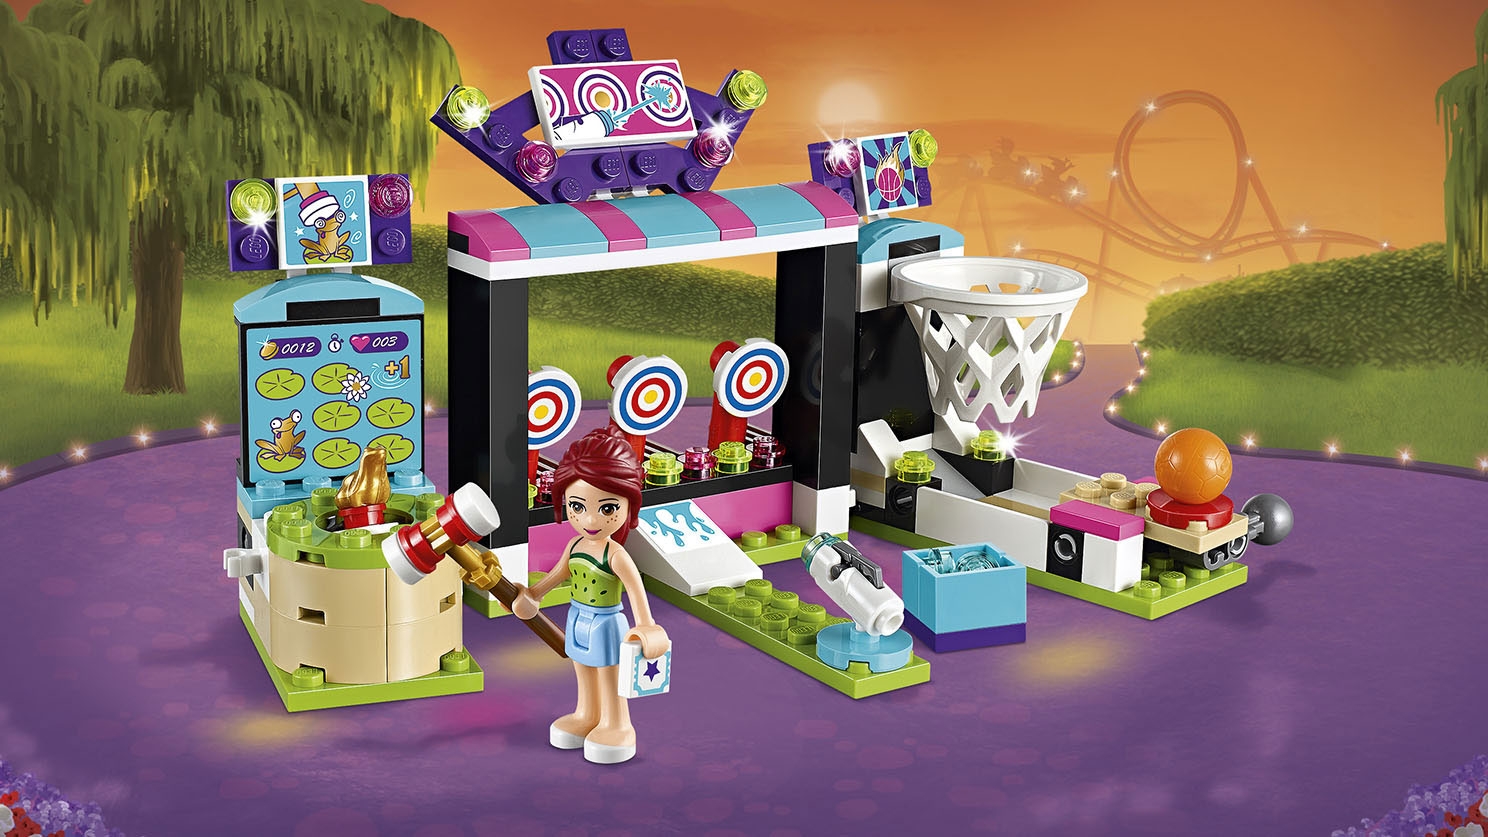 LEGO® Friends Amusement Park Arcade 41127 Popular Kids Toy